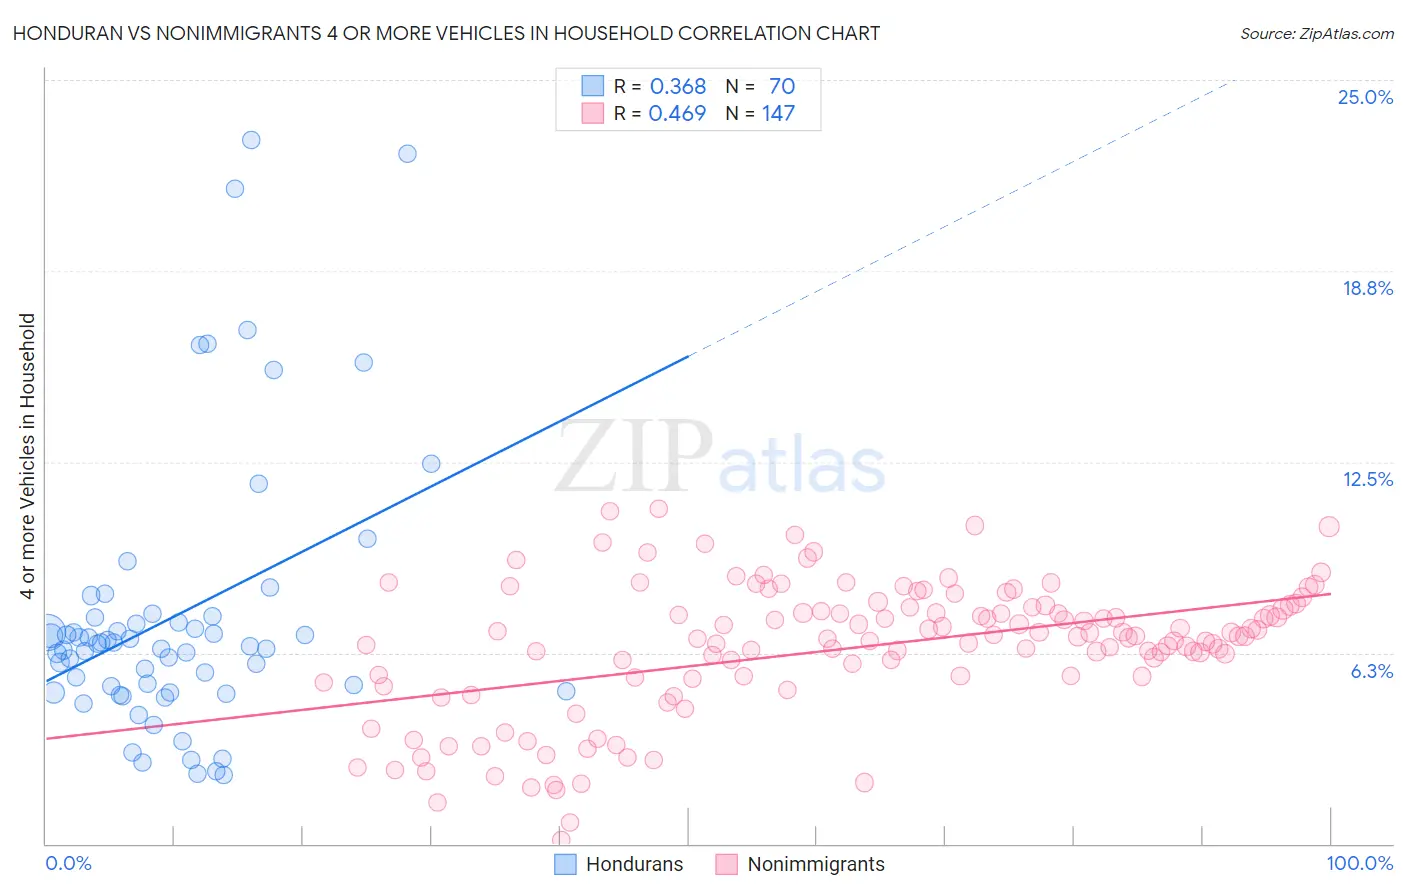 Honduran vs Nonimmigrants 4 or more Vehicles in Household